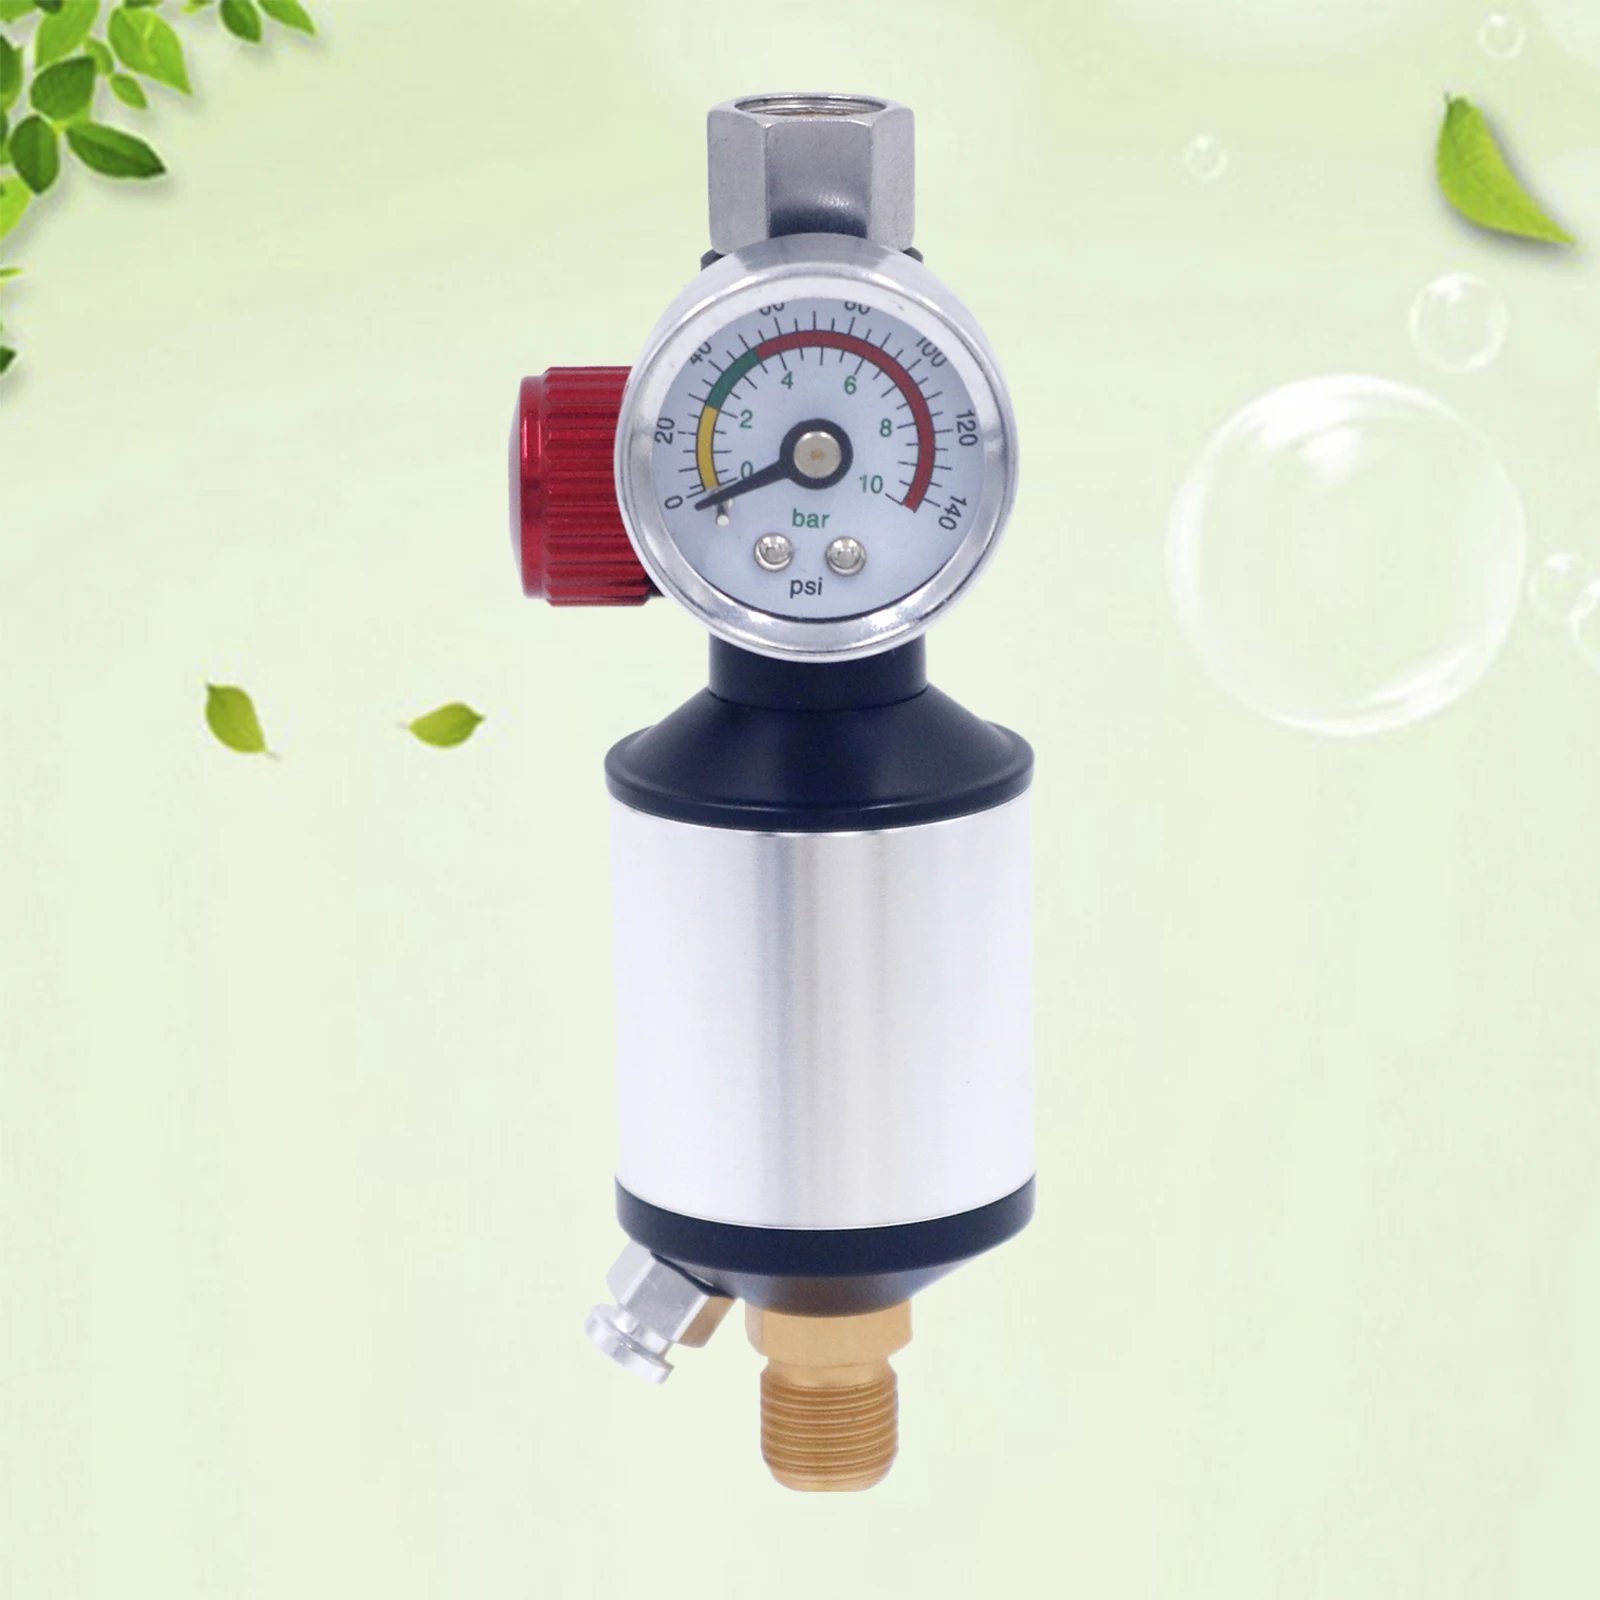 Paint Spray Gun Air Pressure Regulator Gauge with Air Filter Kit G1/4 Threads Oil Water Separator